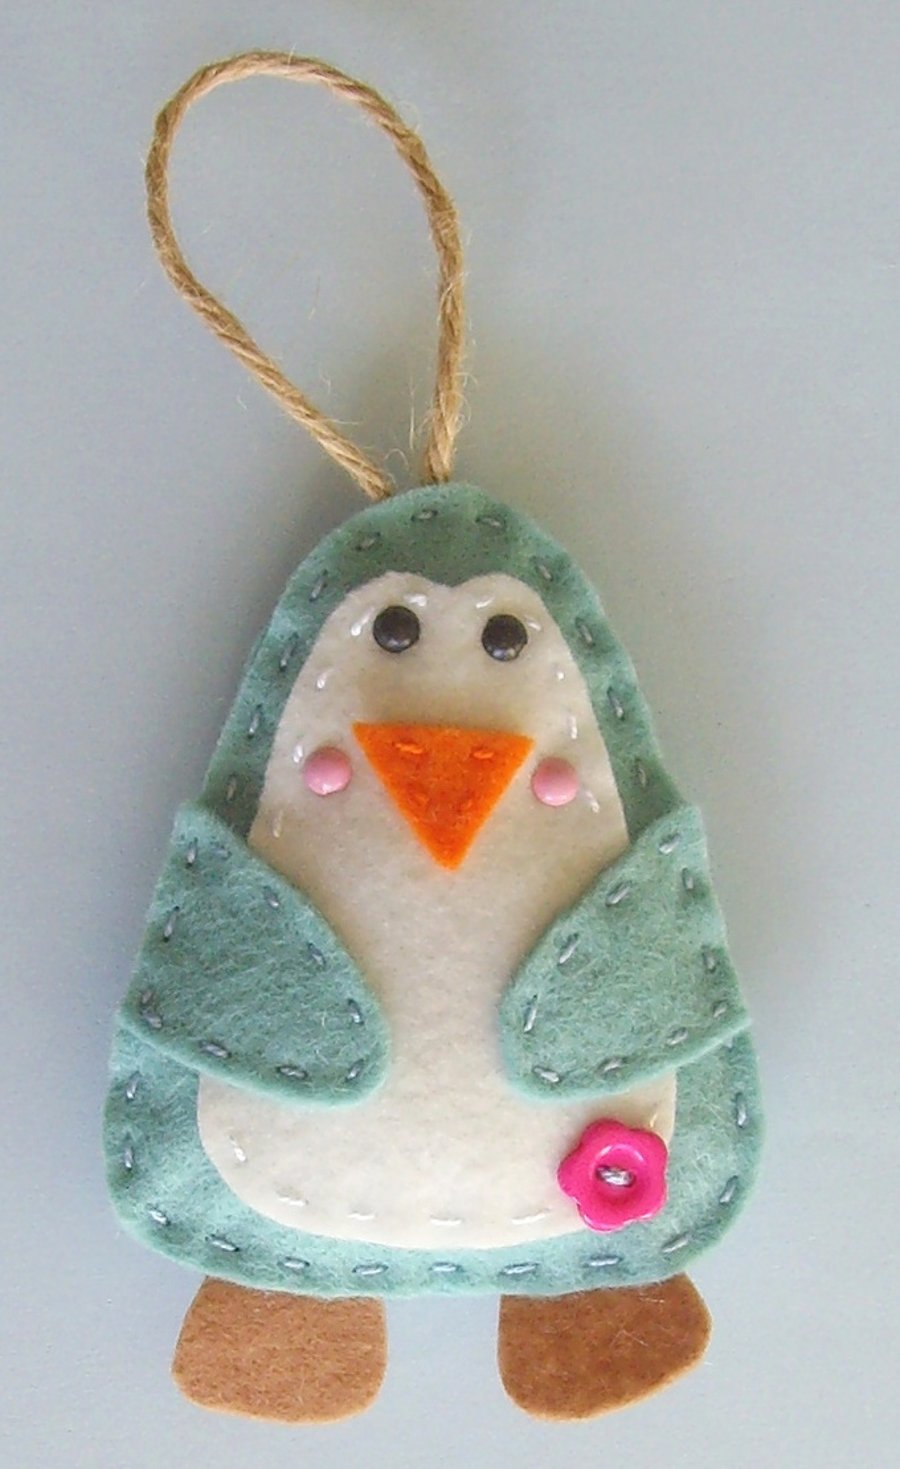 Sewing kit Polly penguin felt decoration